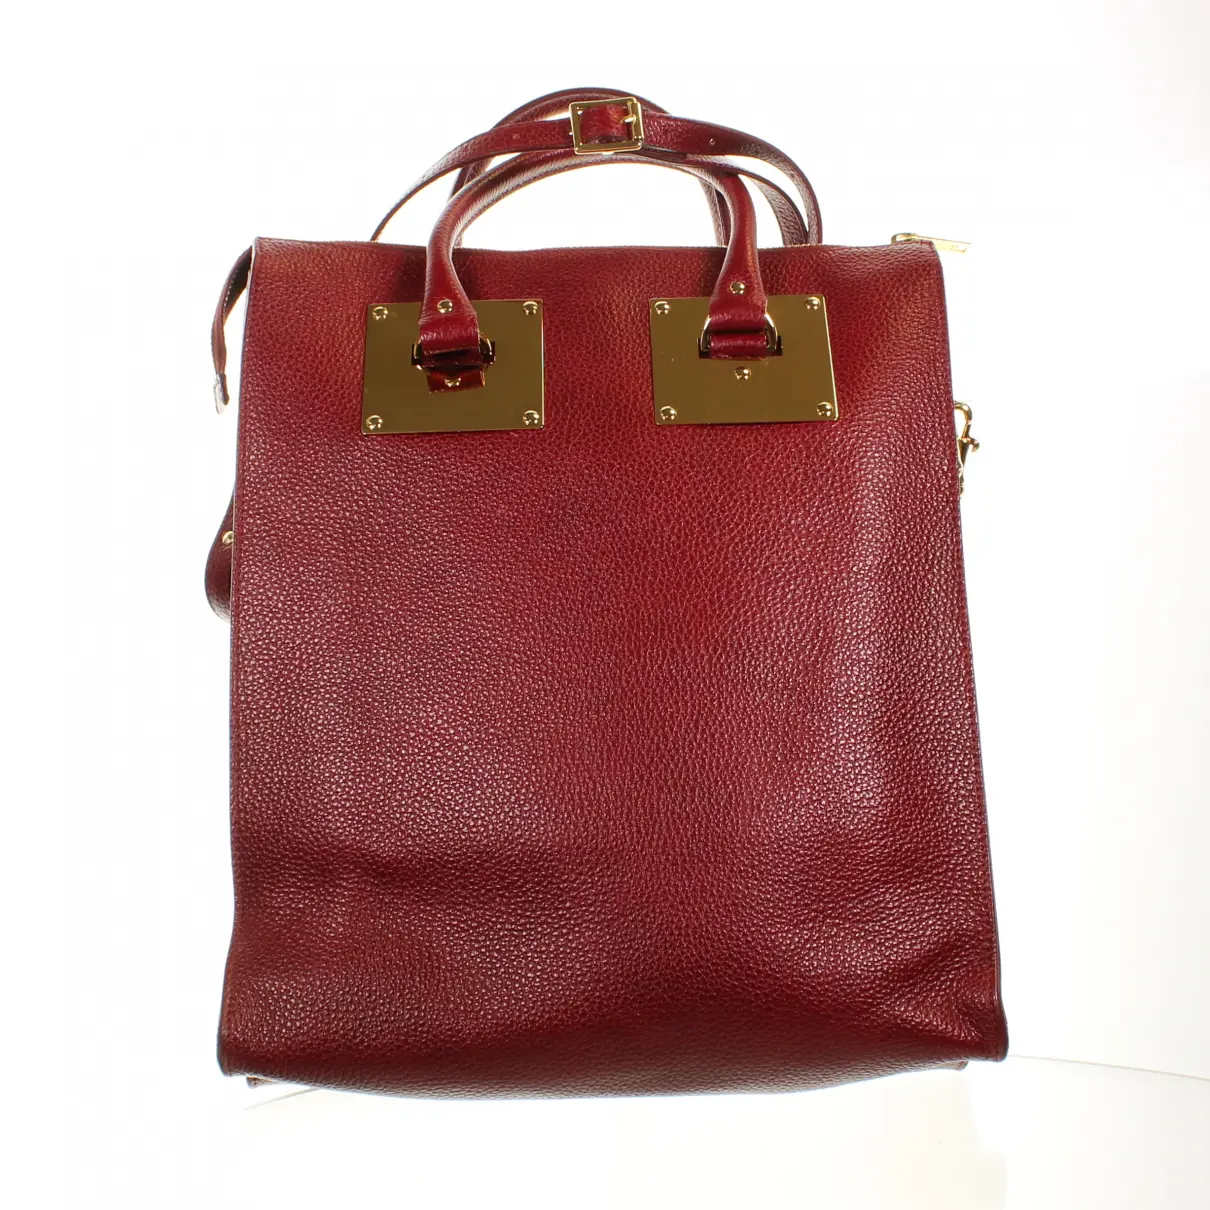 Leather handbag Sophie Hulme